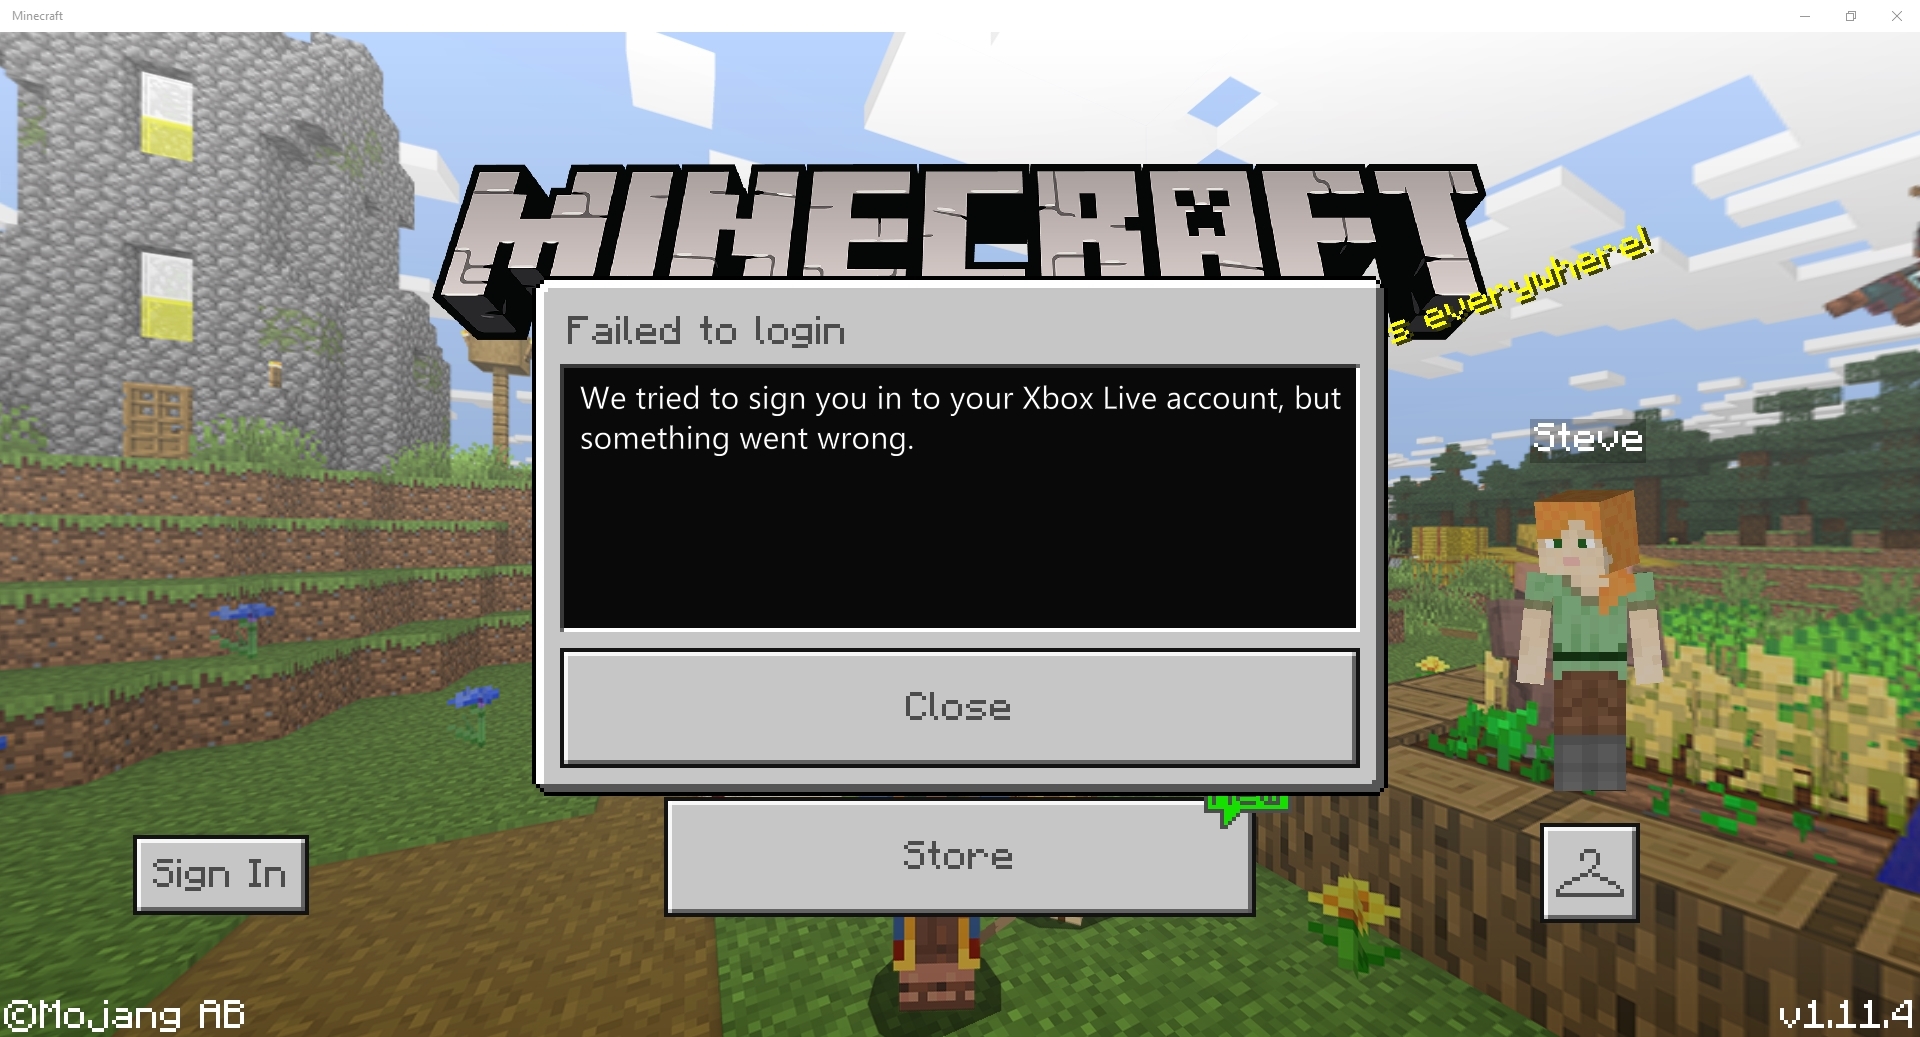 Minecraft Windows 10 PC Cannot Login to Xbox Account d542226d-13e2-4a18-876a-0eb7f14f65cf?upload=true.jpg